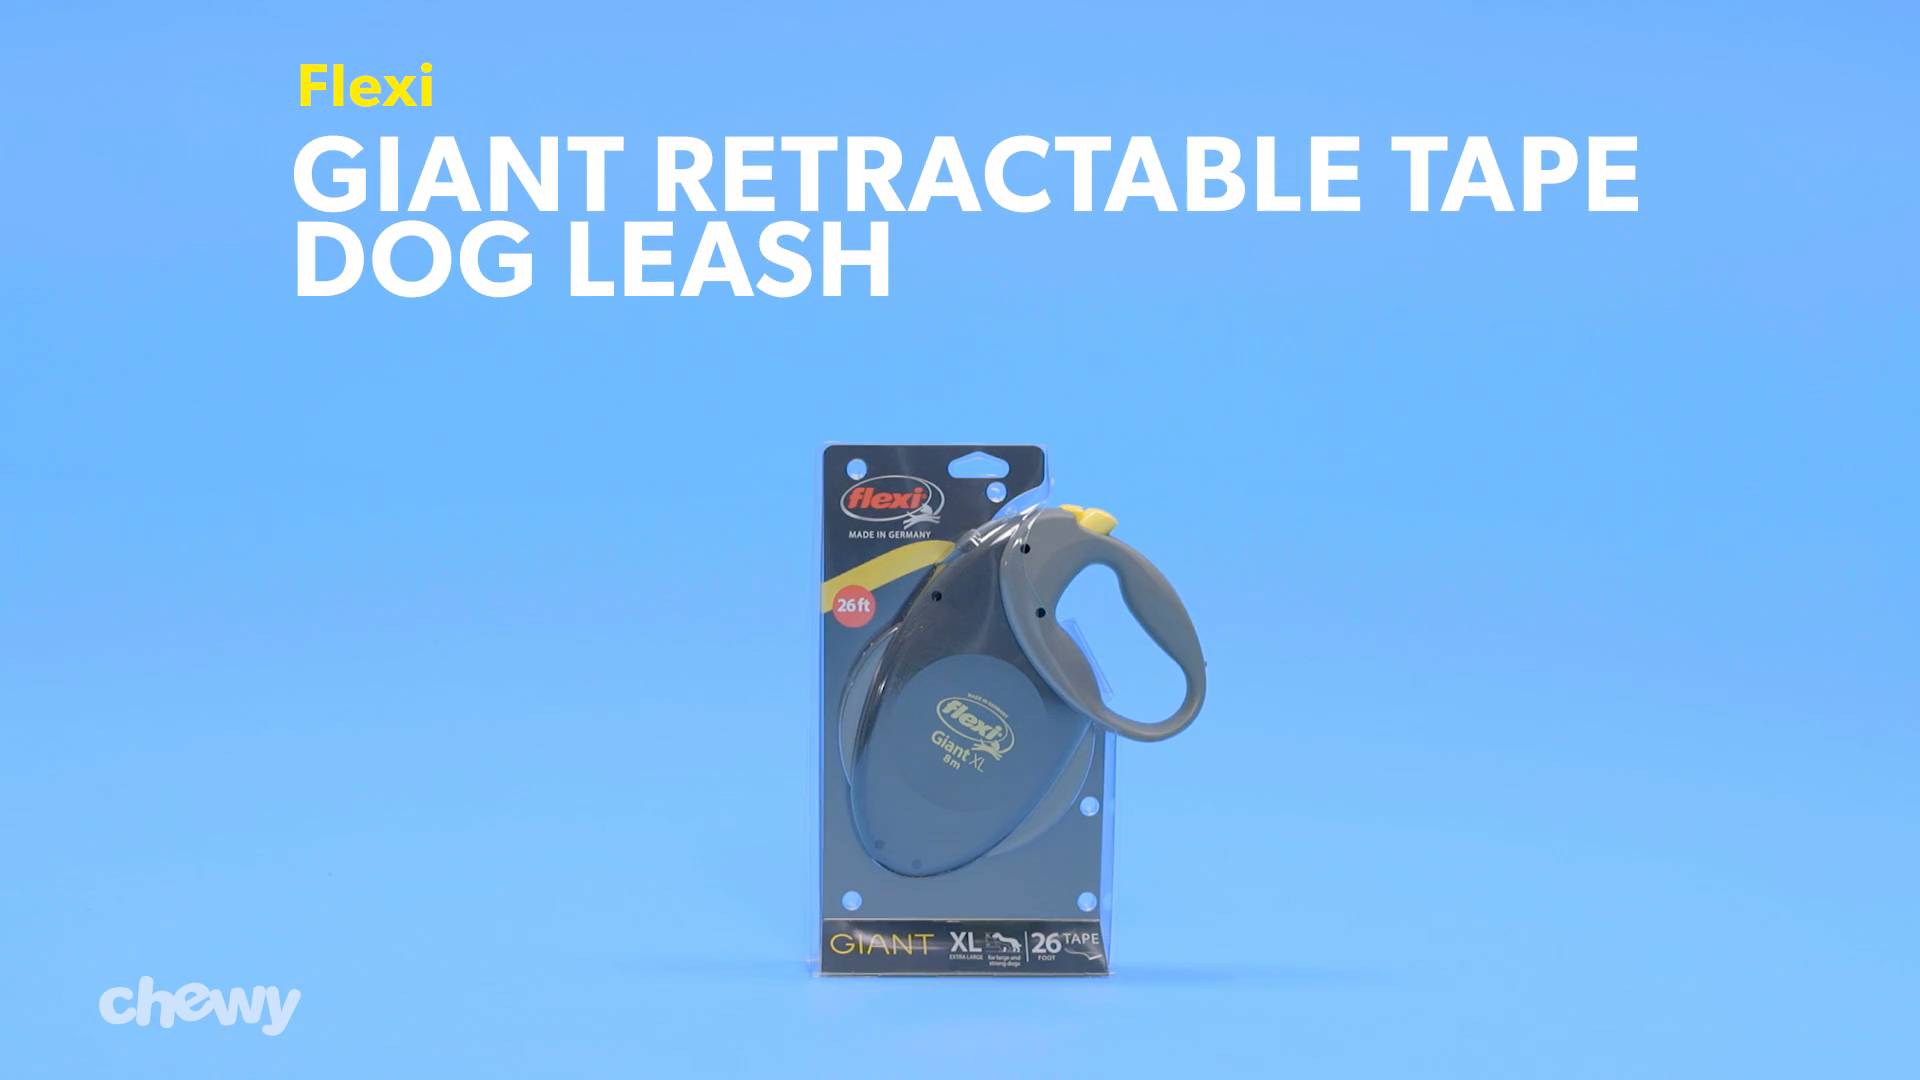 flexi giant retractable dog leash